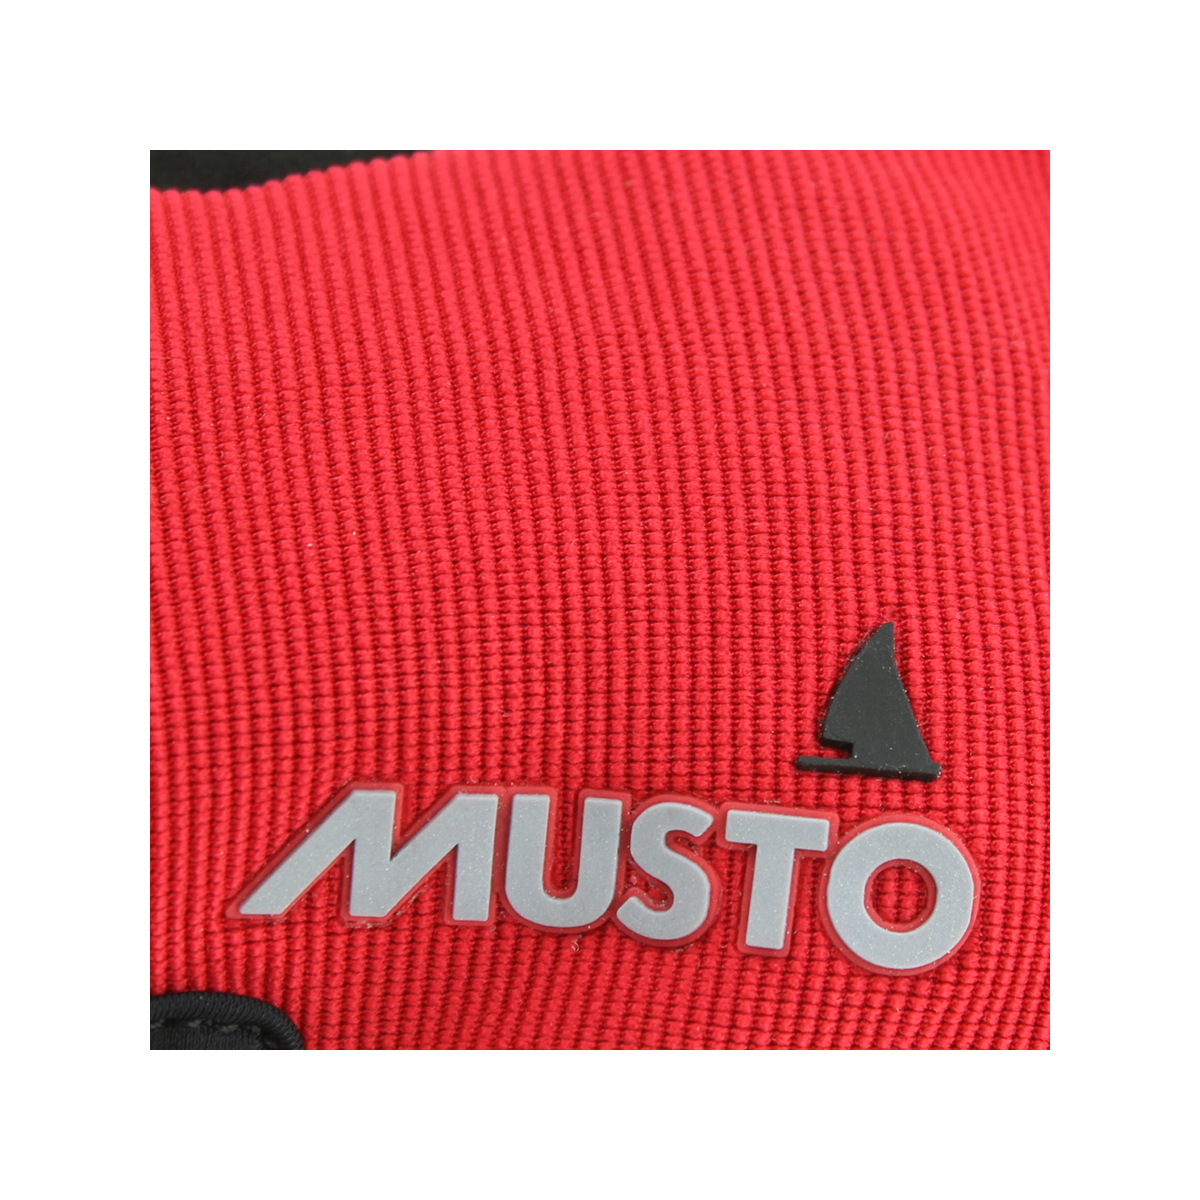 Musto Essential gants de voile longs doigts rouge, taille S